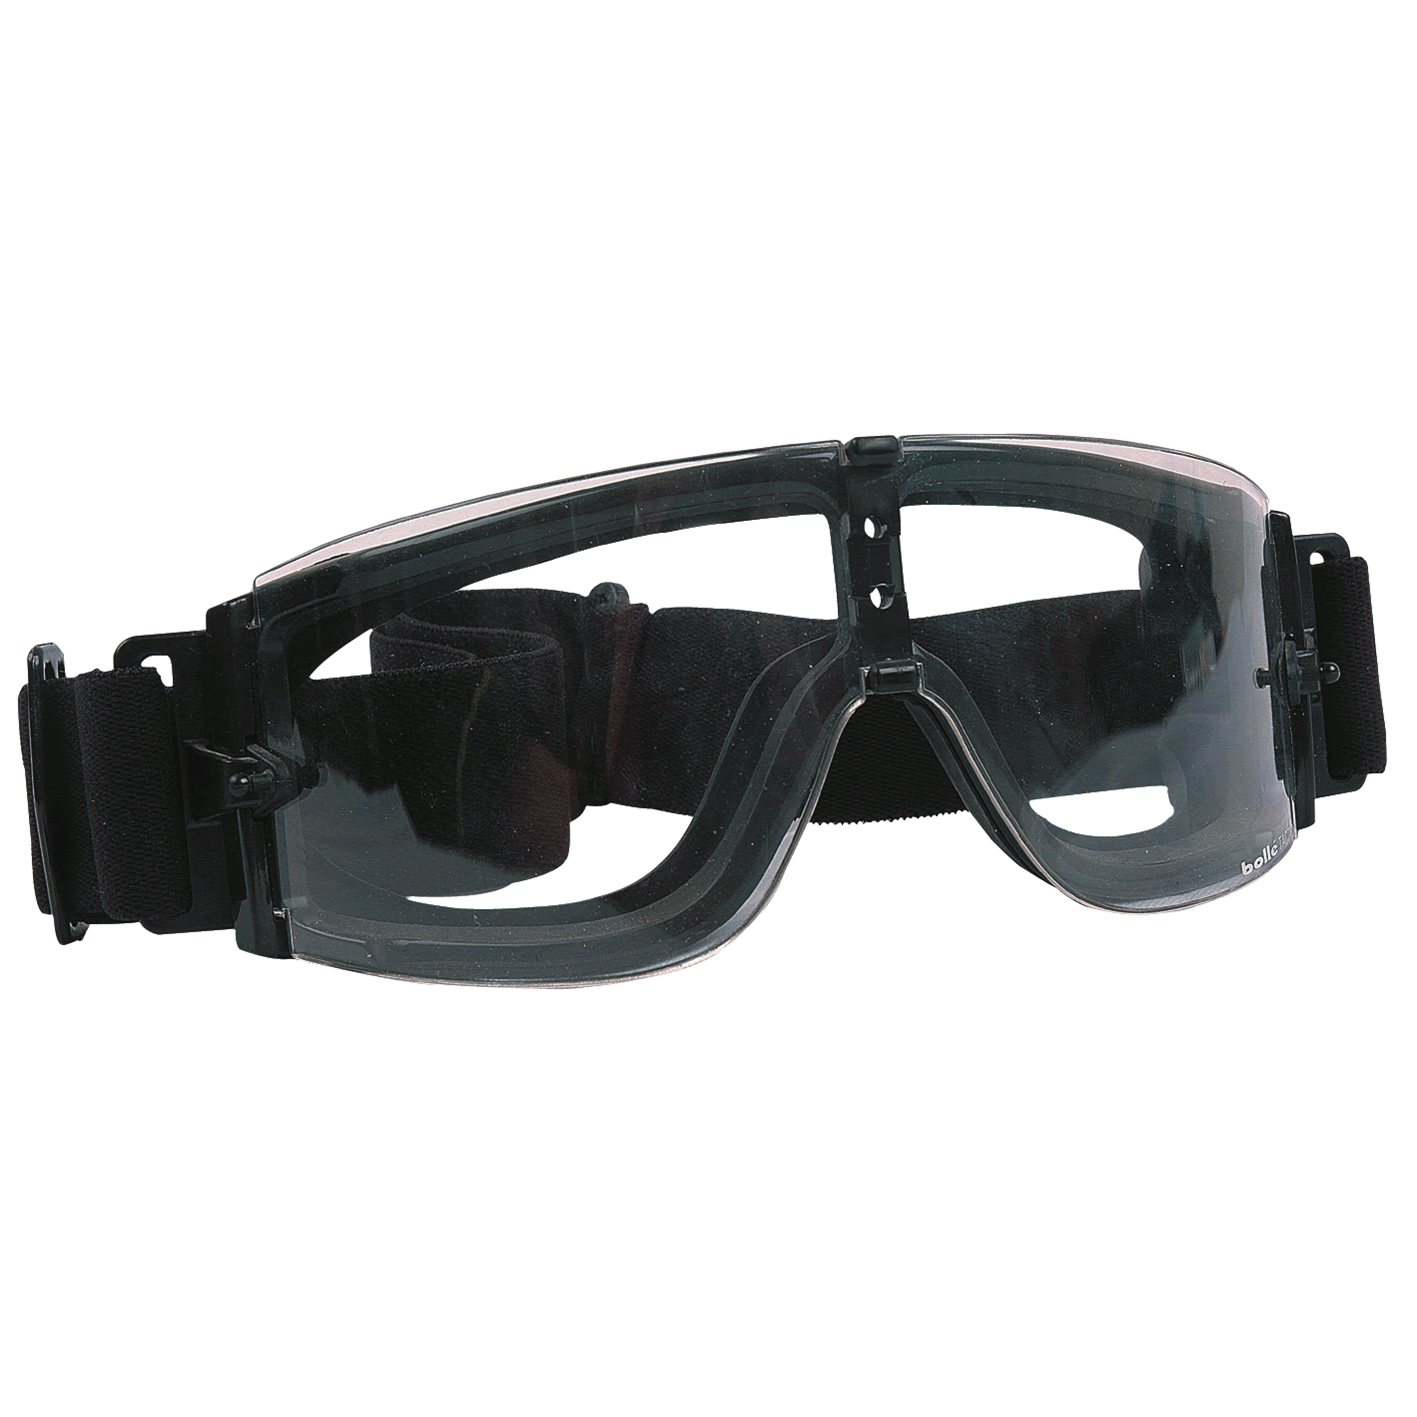 Anti-ballistic goggles